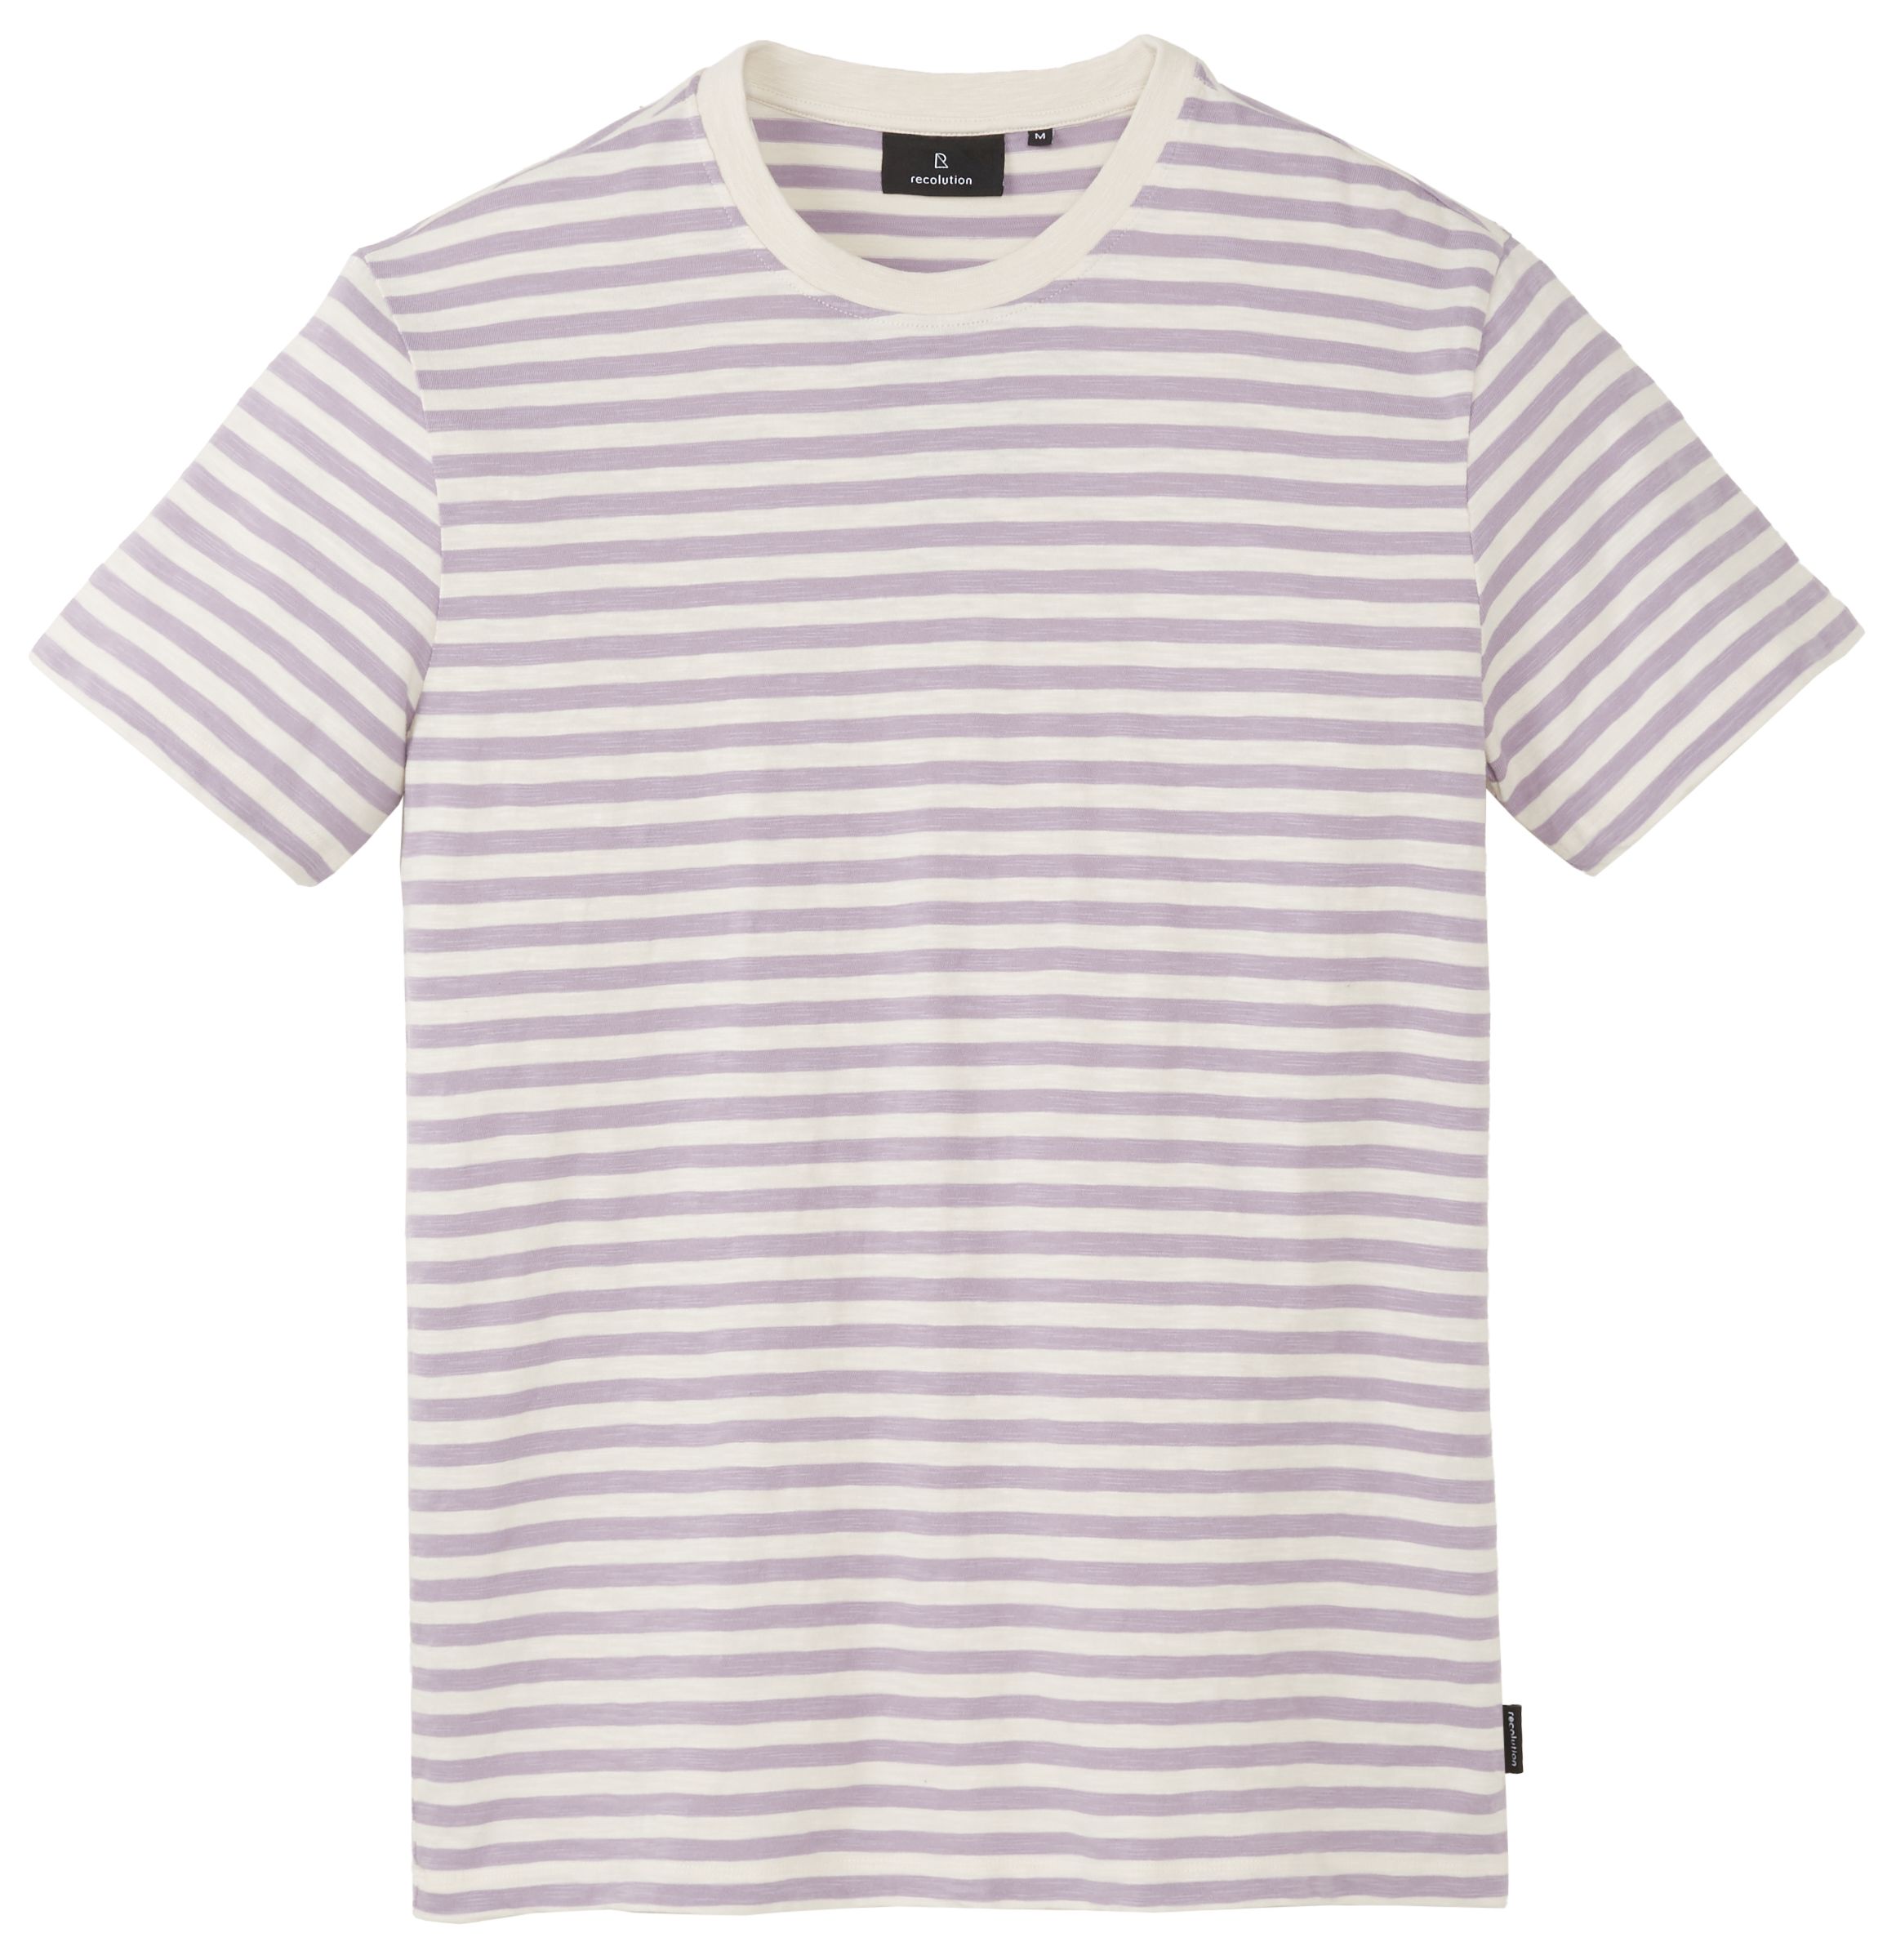 Gestreiftes T-Shirt DELONIX STRIPES gray lilac